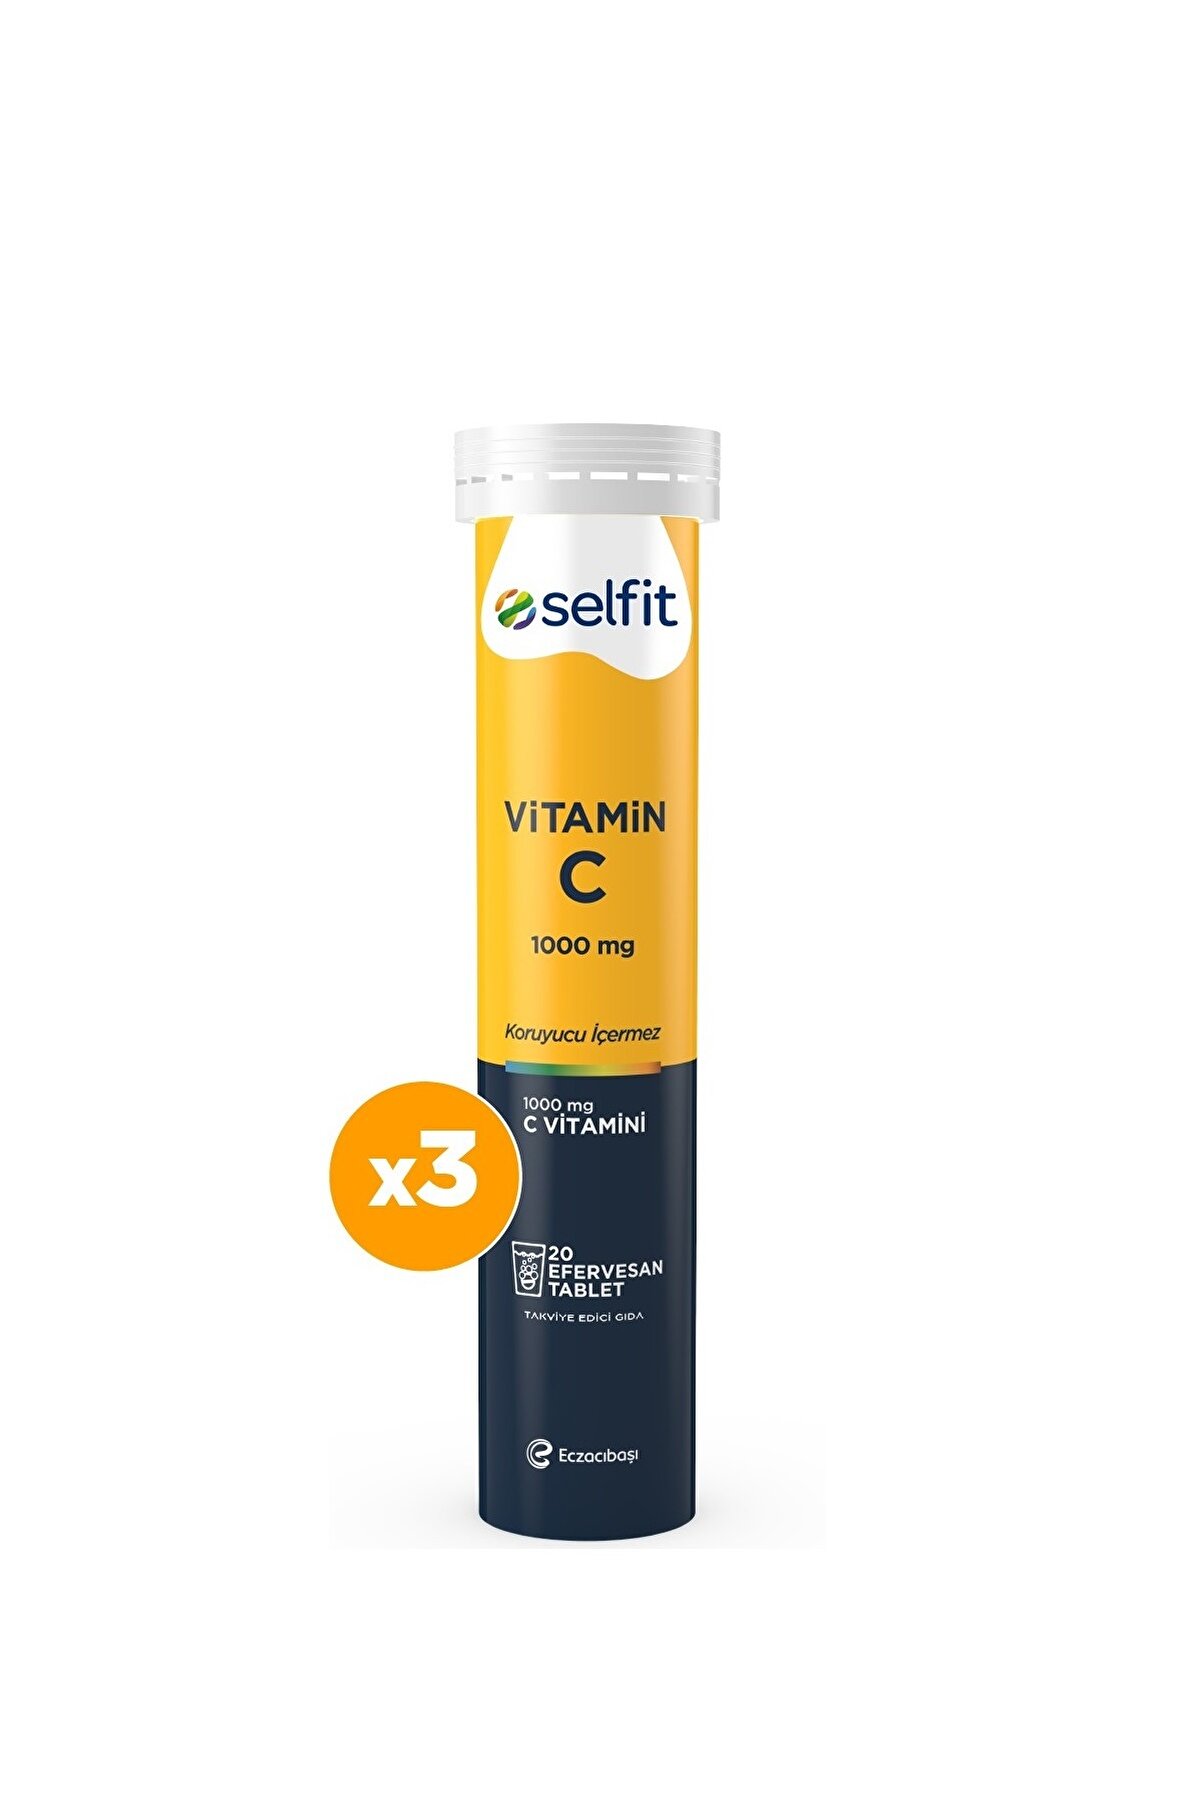 Selfit Vitamin C 1000 Mg 20 Efervesan Tablet X 3 Adet